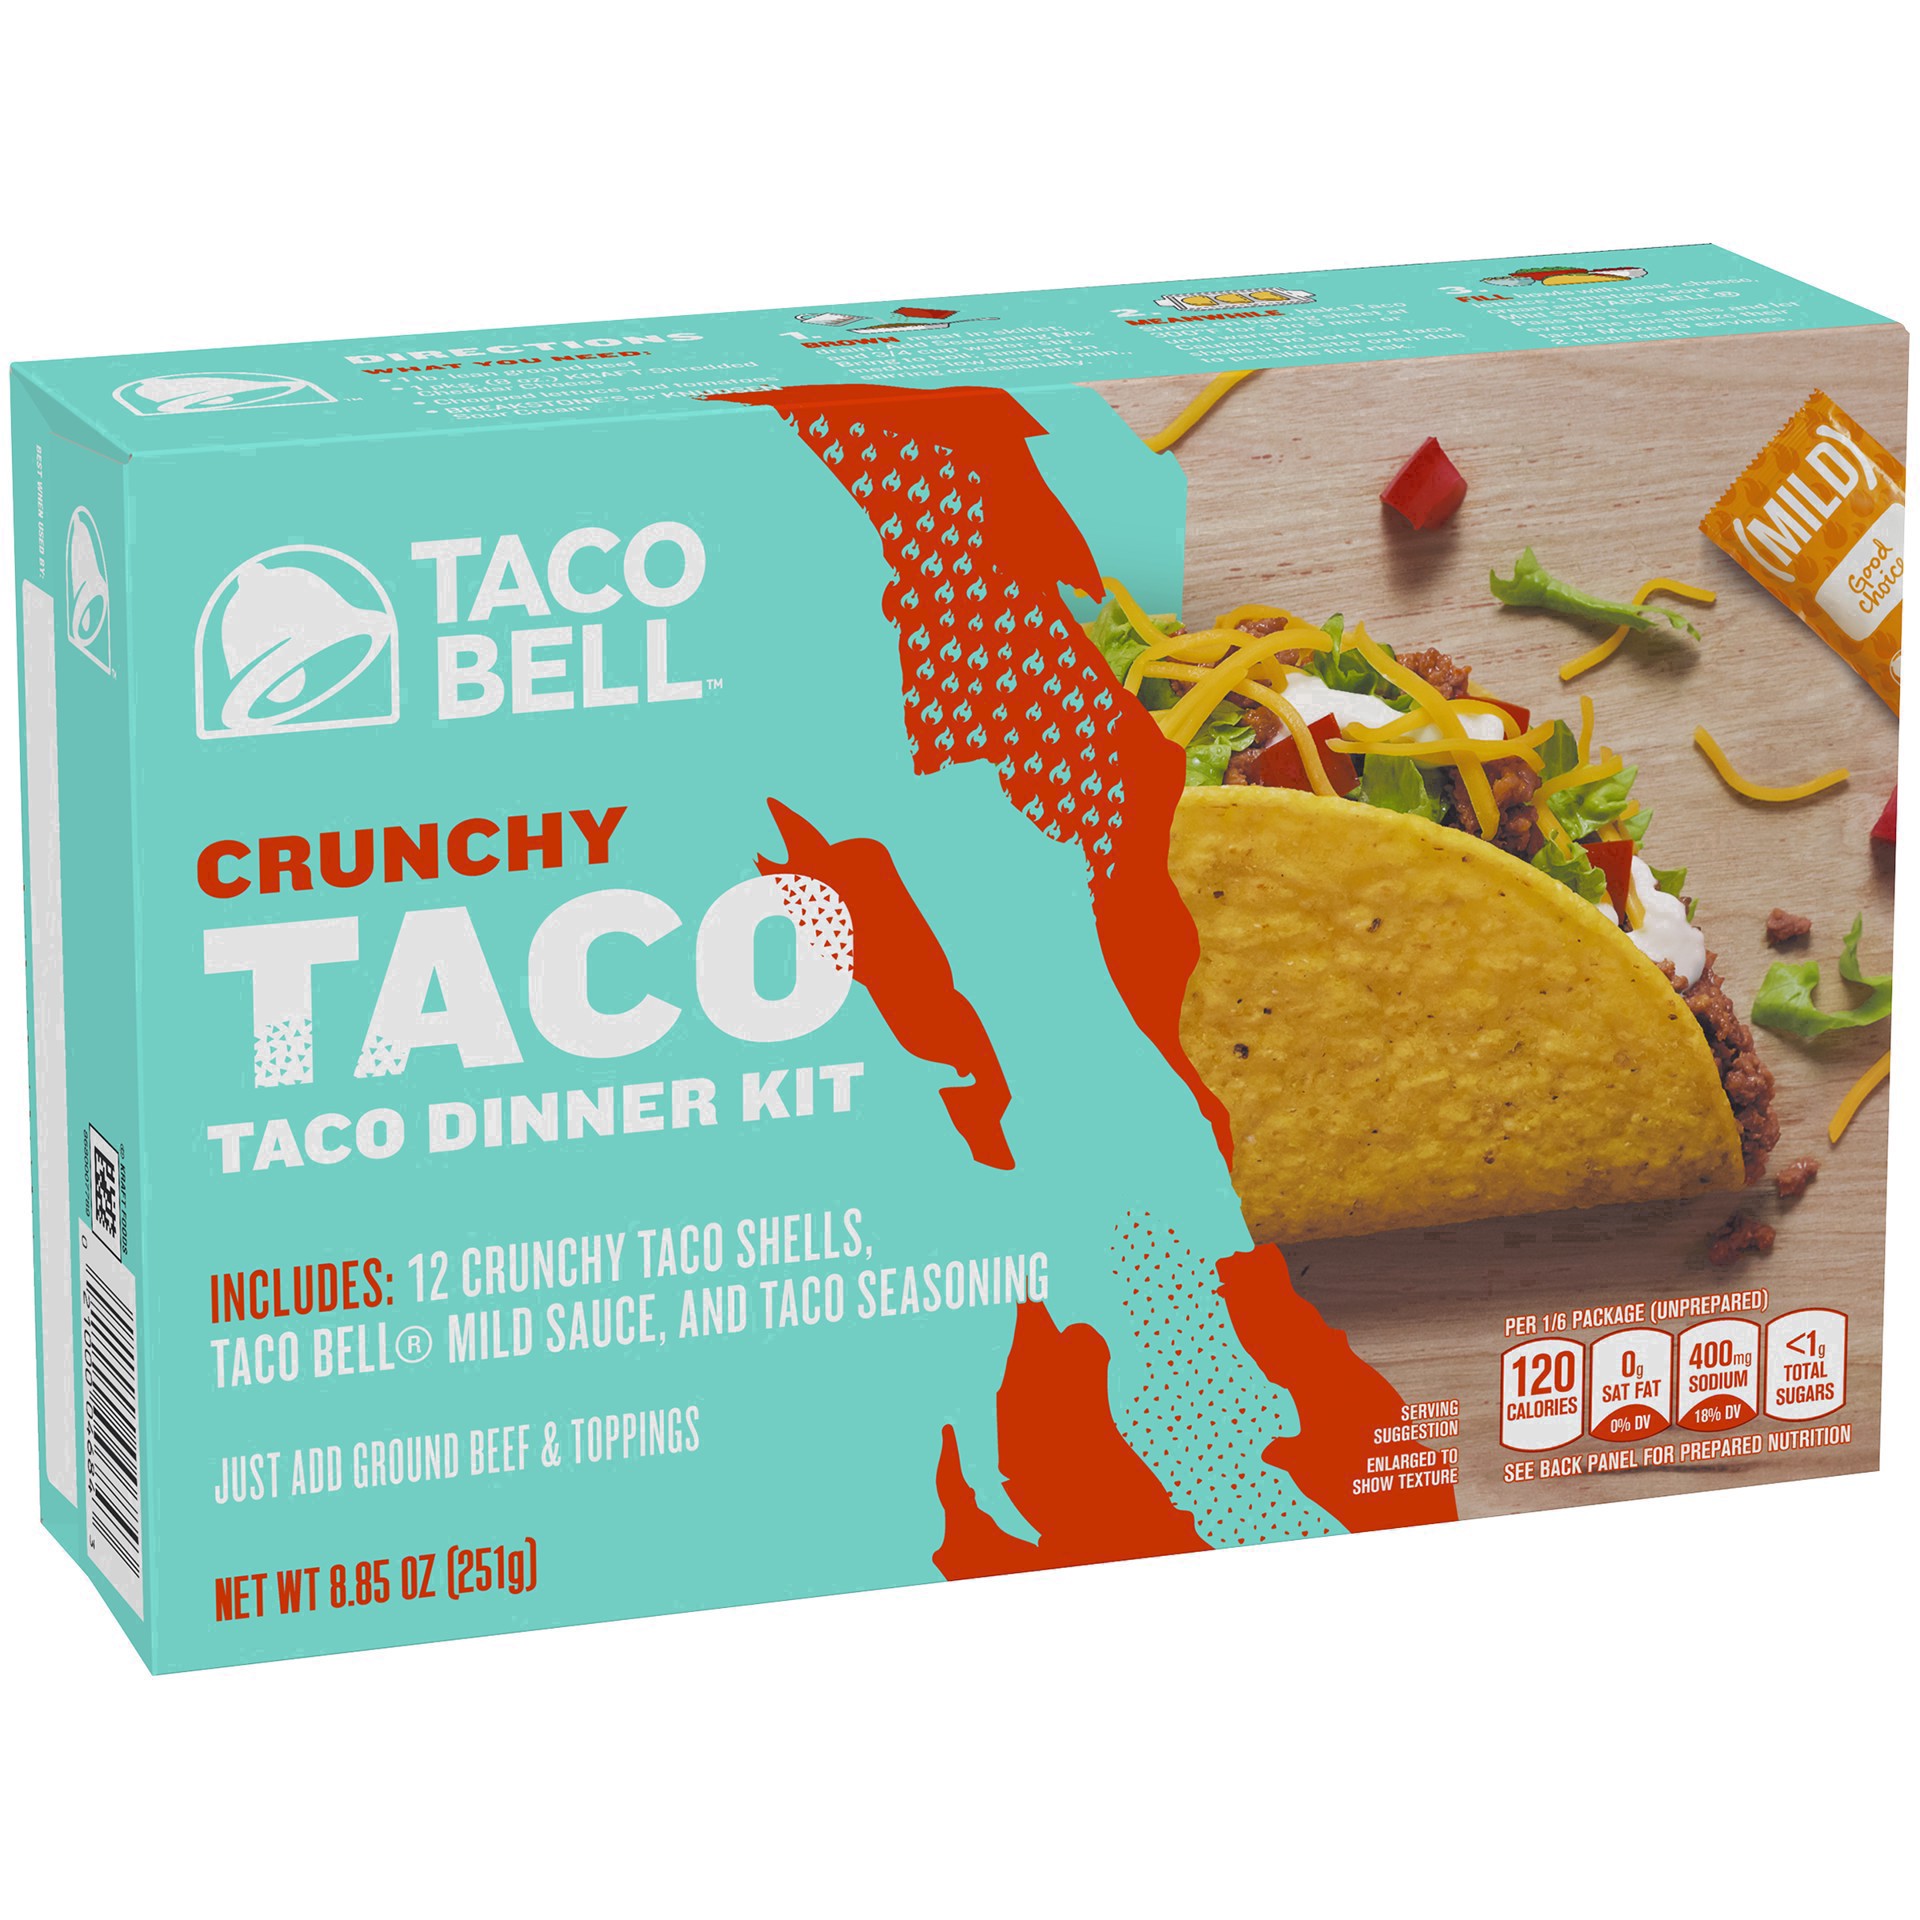 slide 13 of 91, Taco Bell Crunchy Taco Cravings Kit with 12 Crunchy Taco Shells, Taco Bell Mild Sauce & Seasoning, 8.85 oz Box, 1 ct